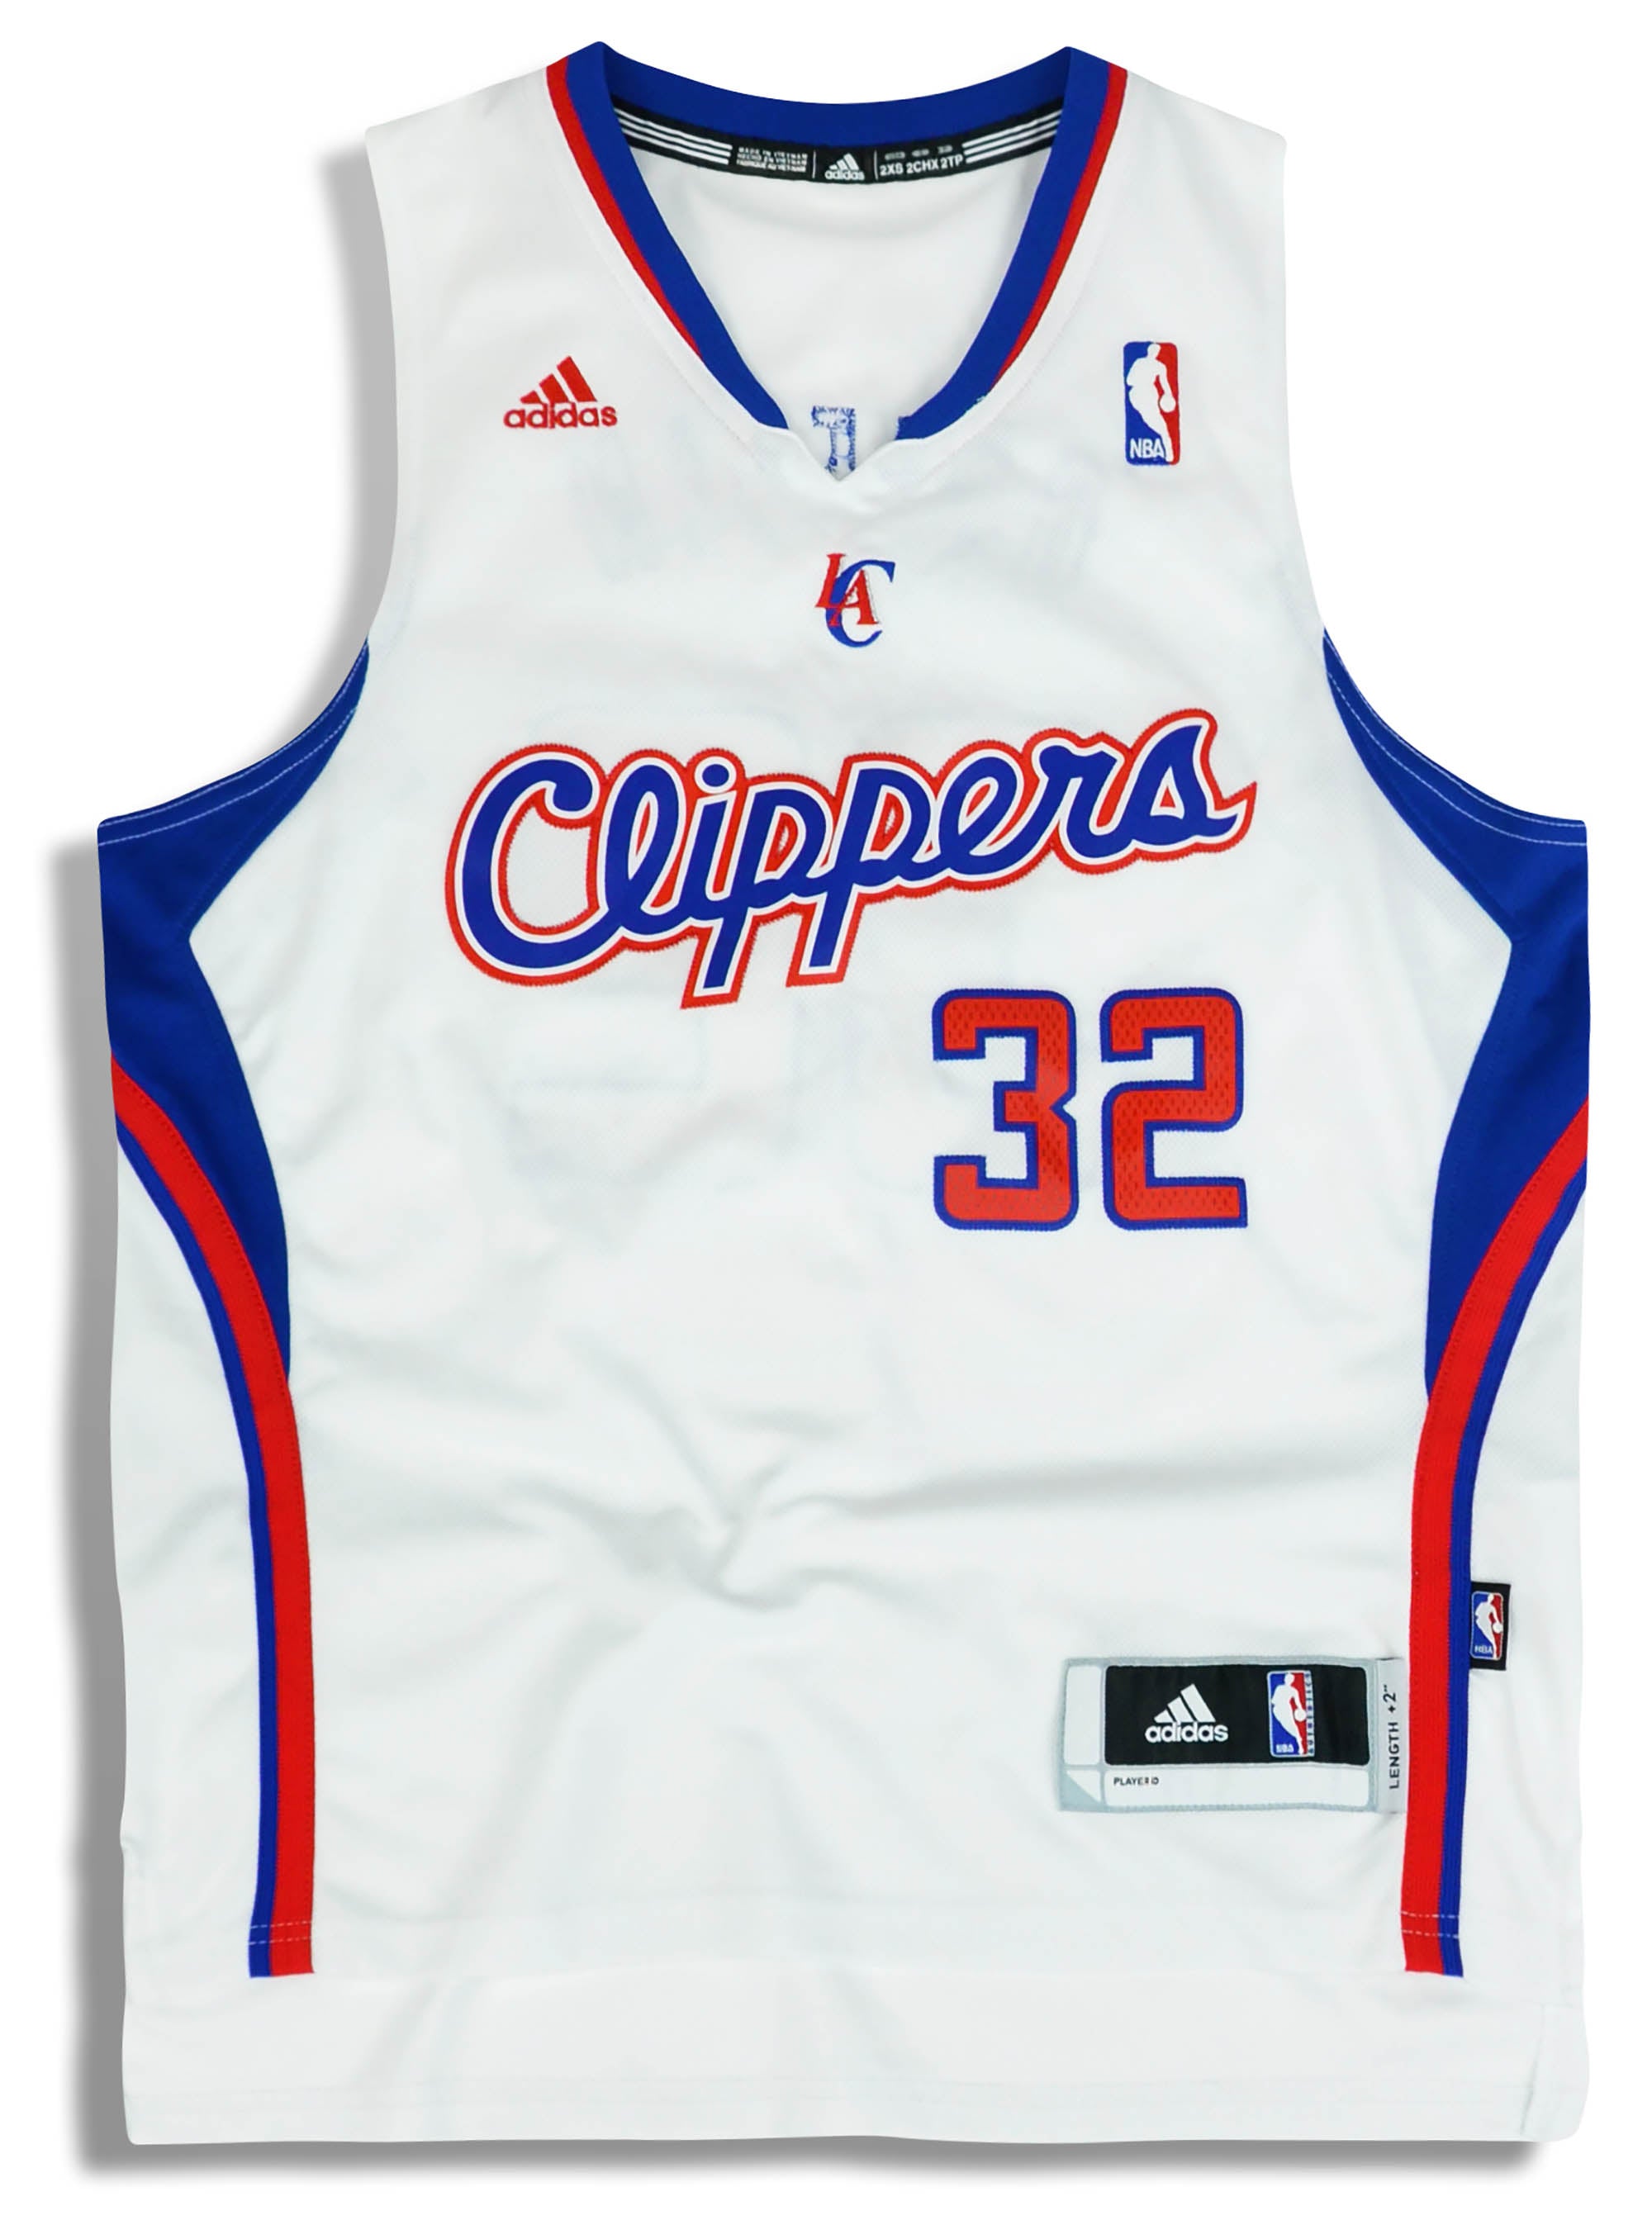 NBA Los Angeles Lakers Basketball Adidas Jersey size Large #32 Johnson